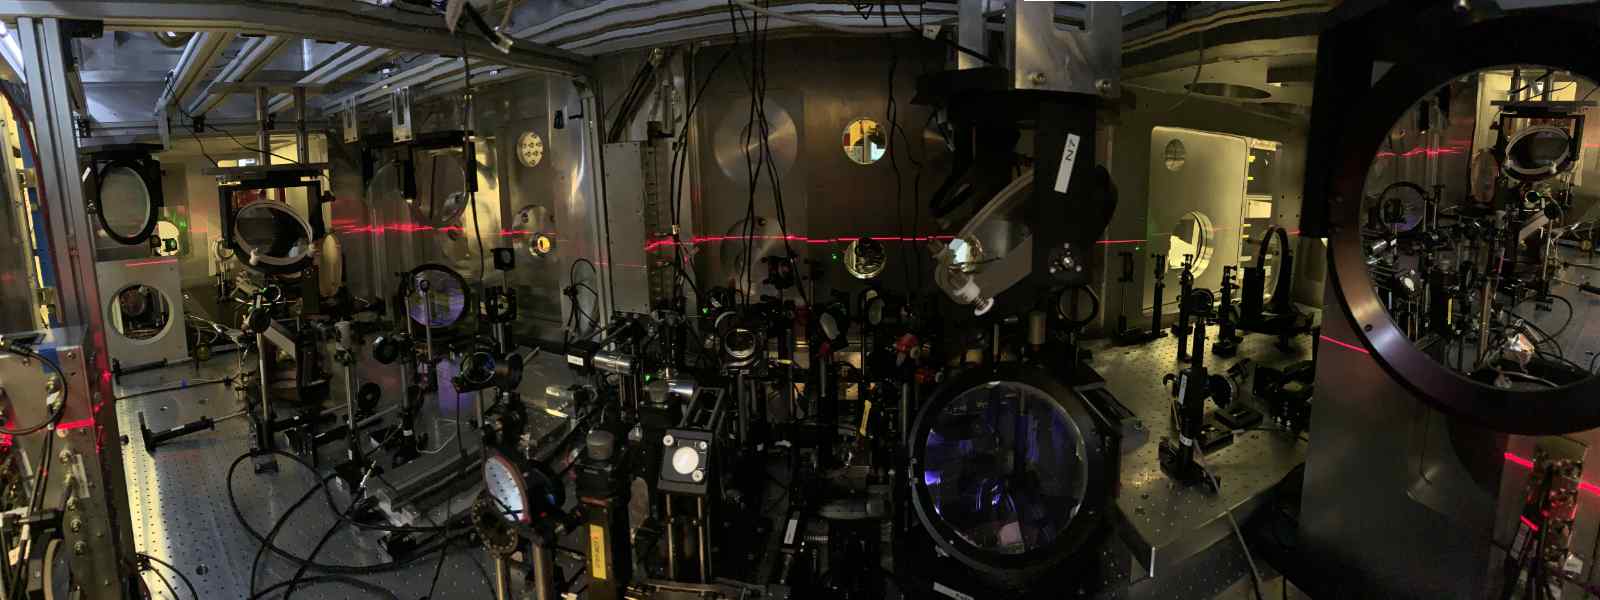 rofessor Dino Jaroszynski's experimental setup to investigate plasma photonic structures at the Central Laser Facility, Rutherford Appleton Laboratory